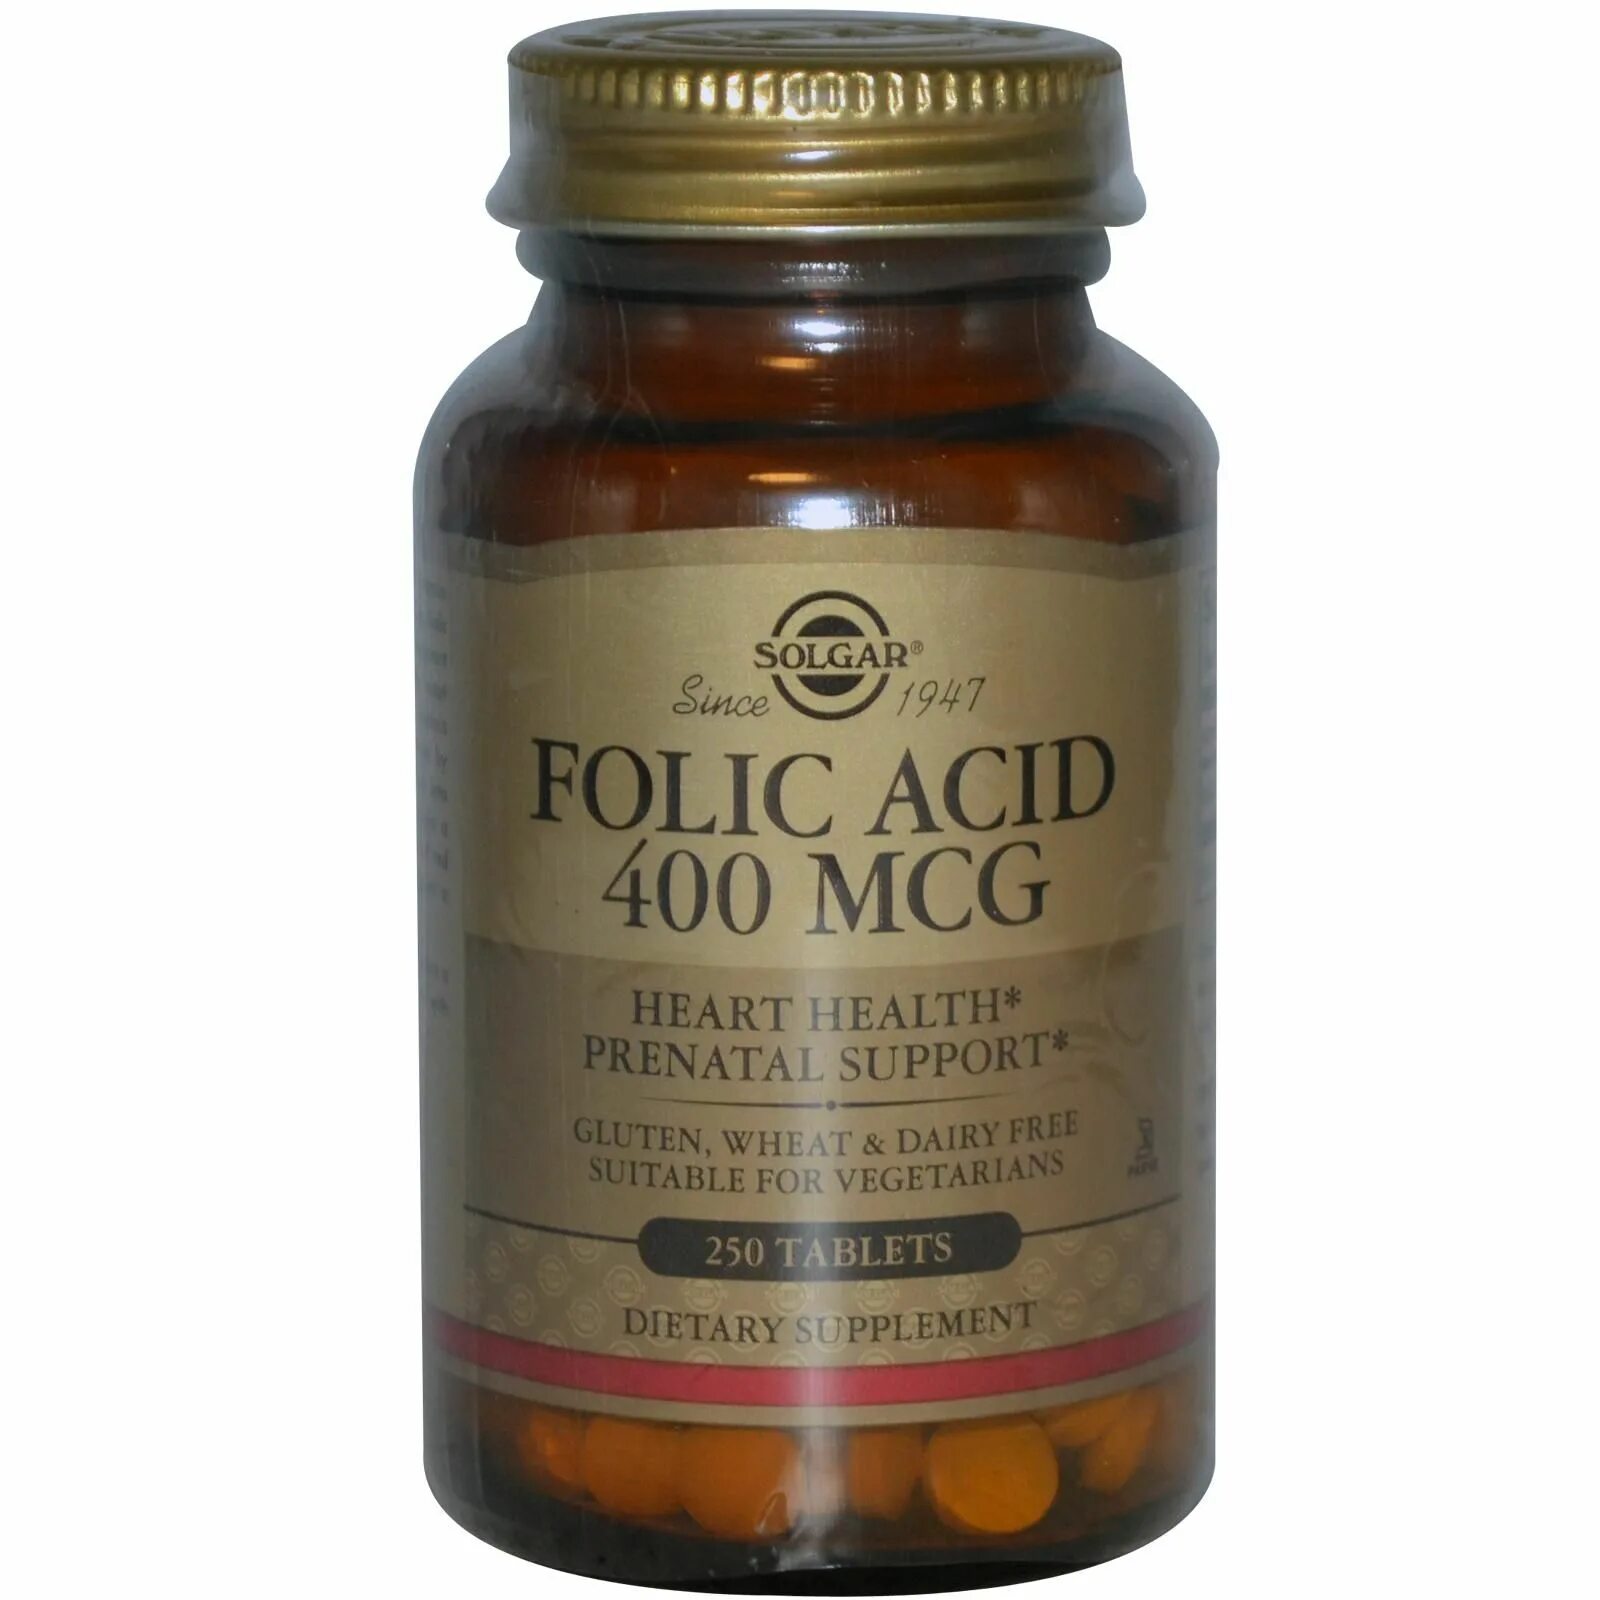 Солгар фолиевая кислота 400. Solgar folic acid 400 MCG. Солгар (Solgar) витамин b9. Solgar folic acid таблетки.